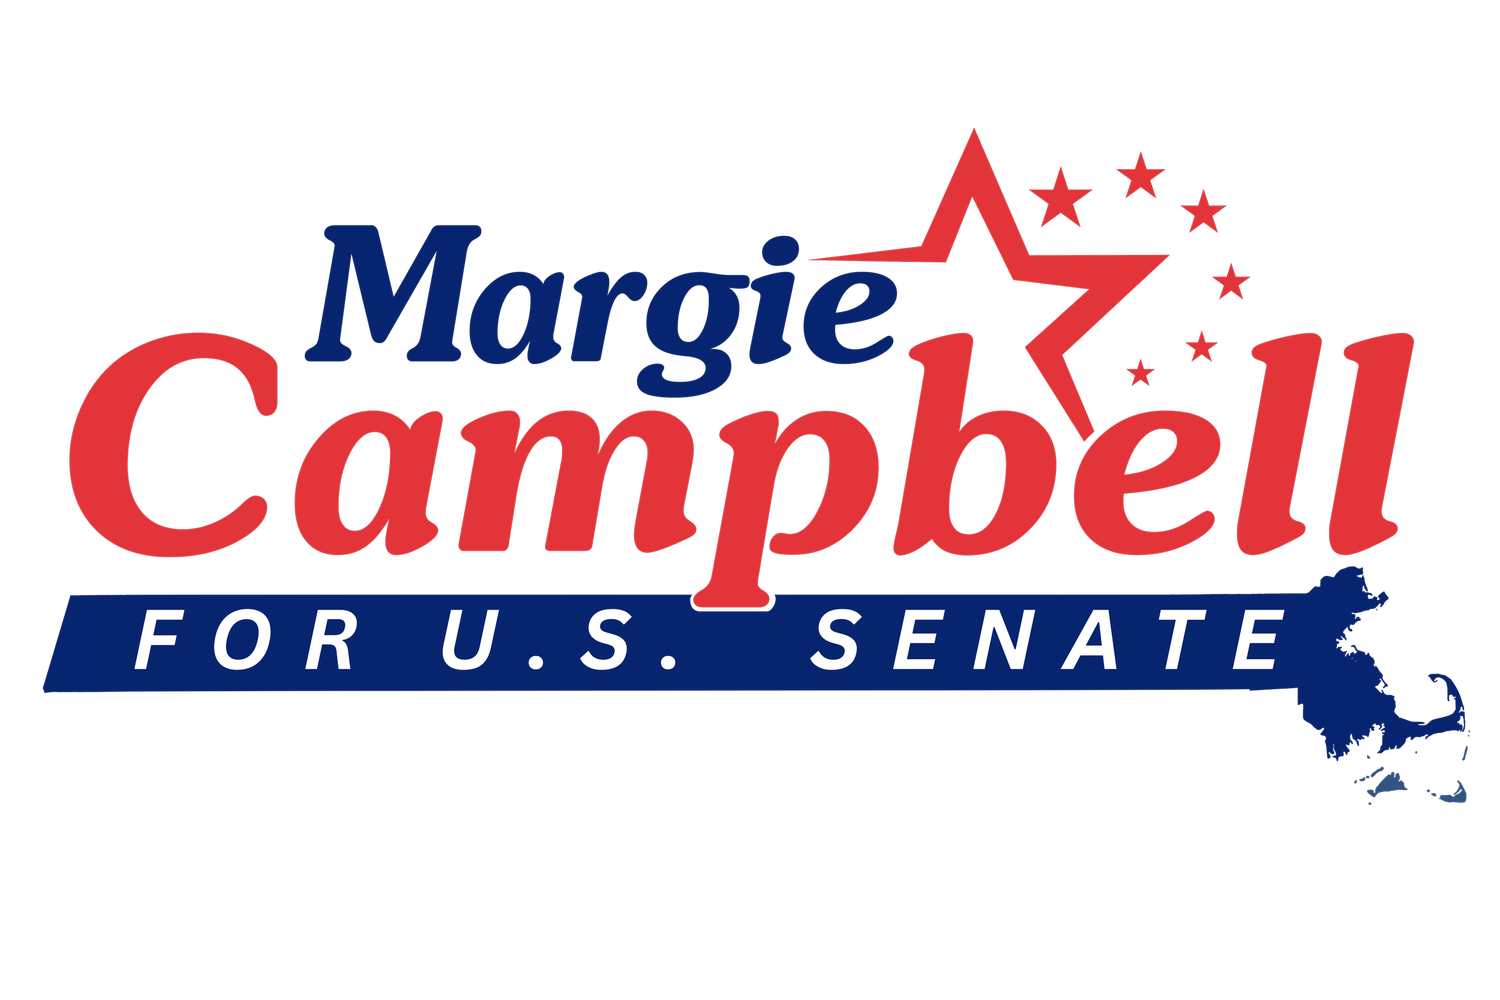 Margie Campbell for U.S. Senate